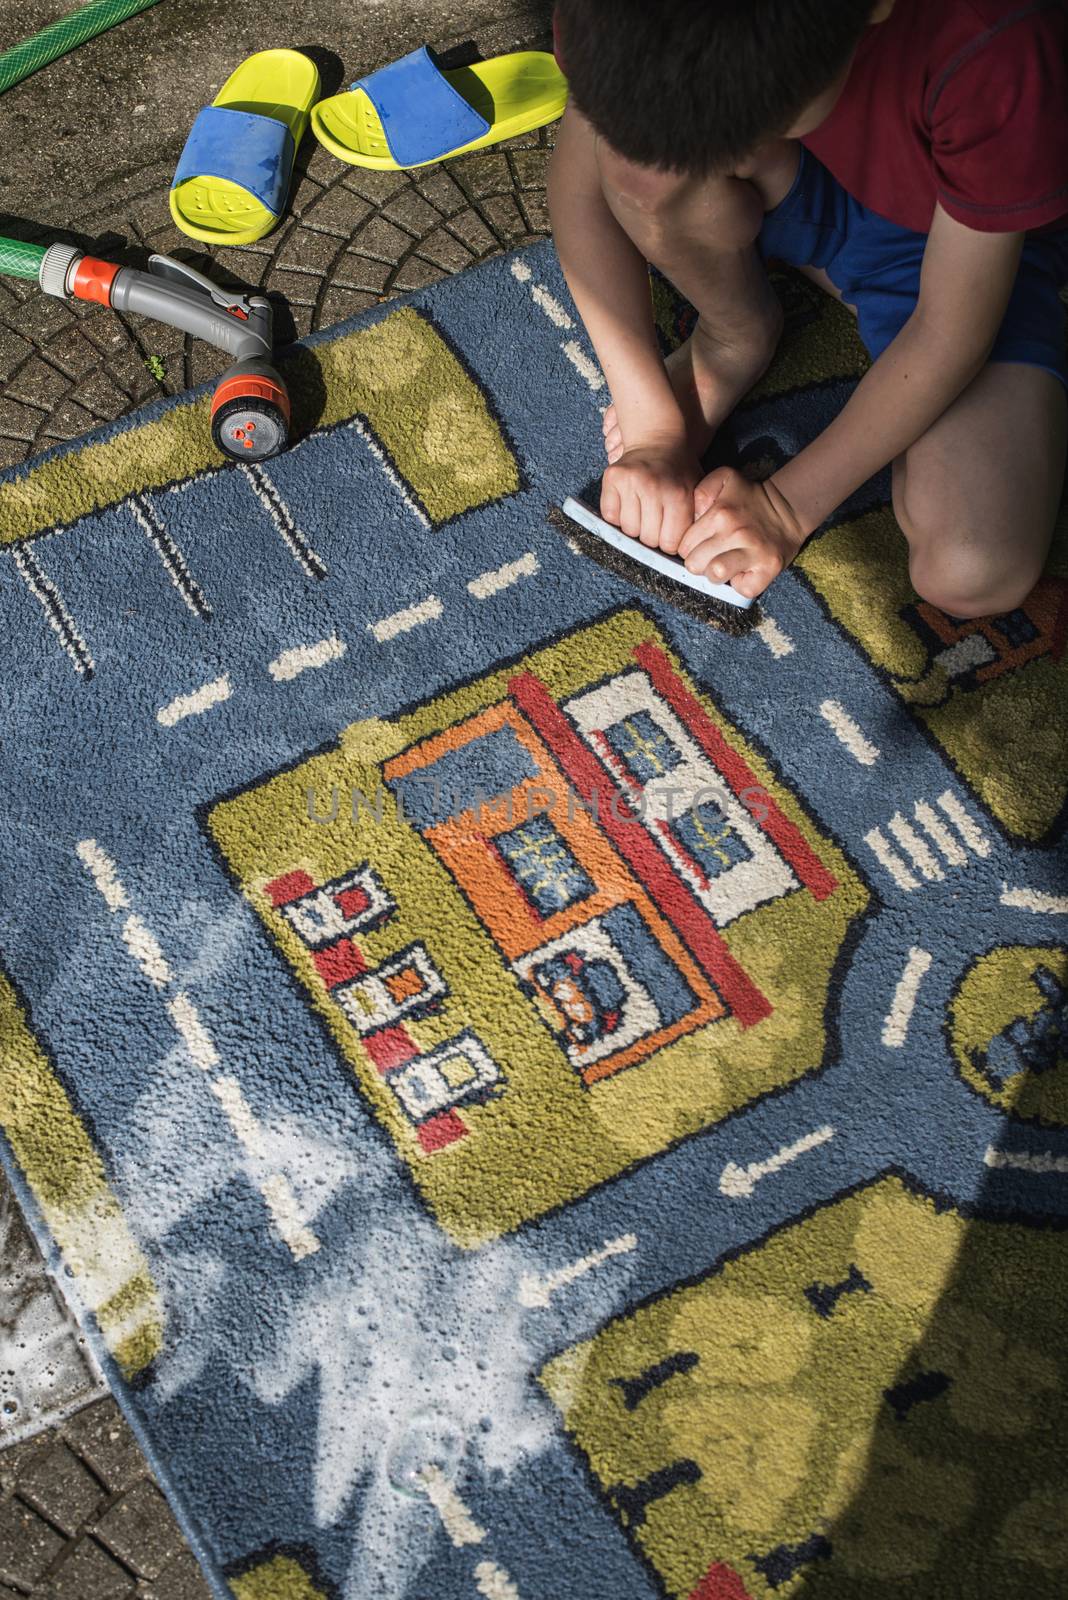 Child clean carpet. Exterior shot